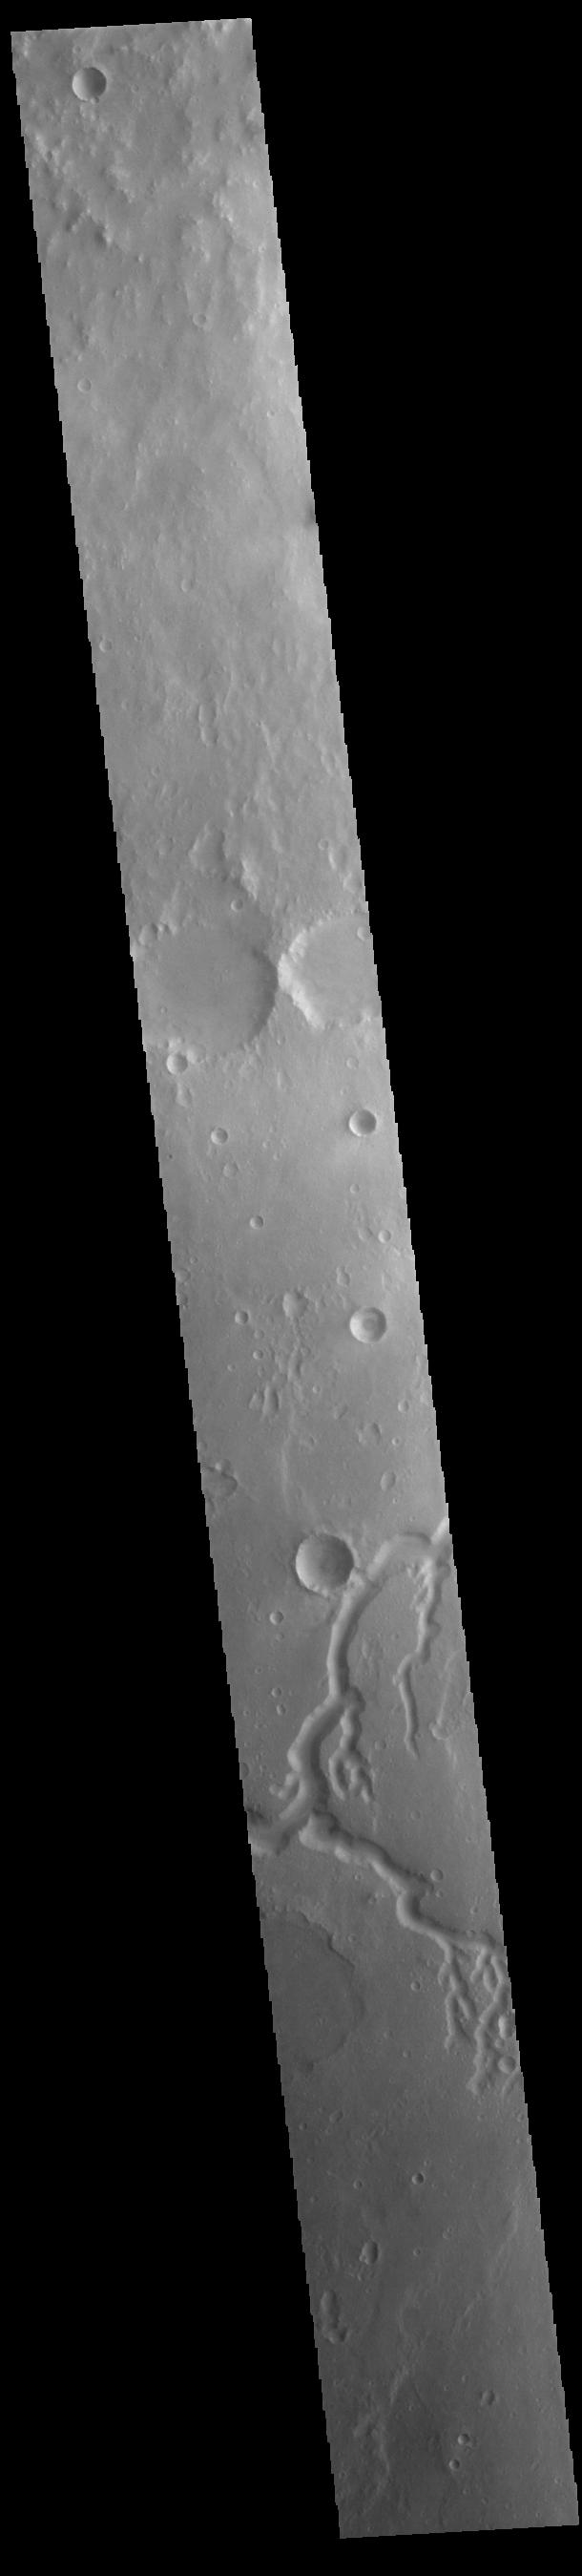 PIA24780: Nanedi Valles